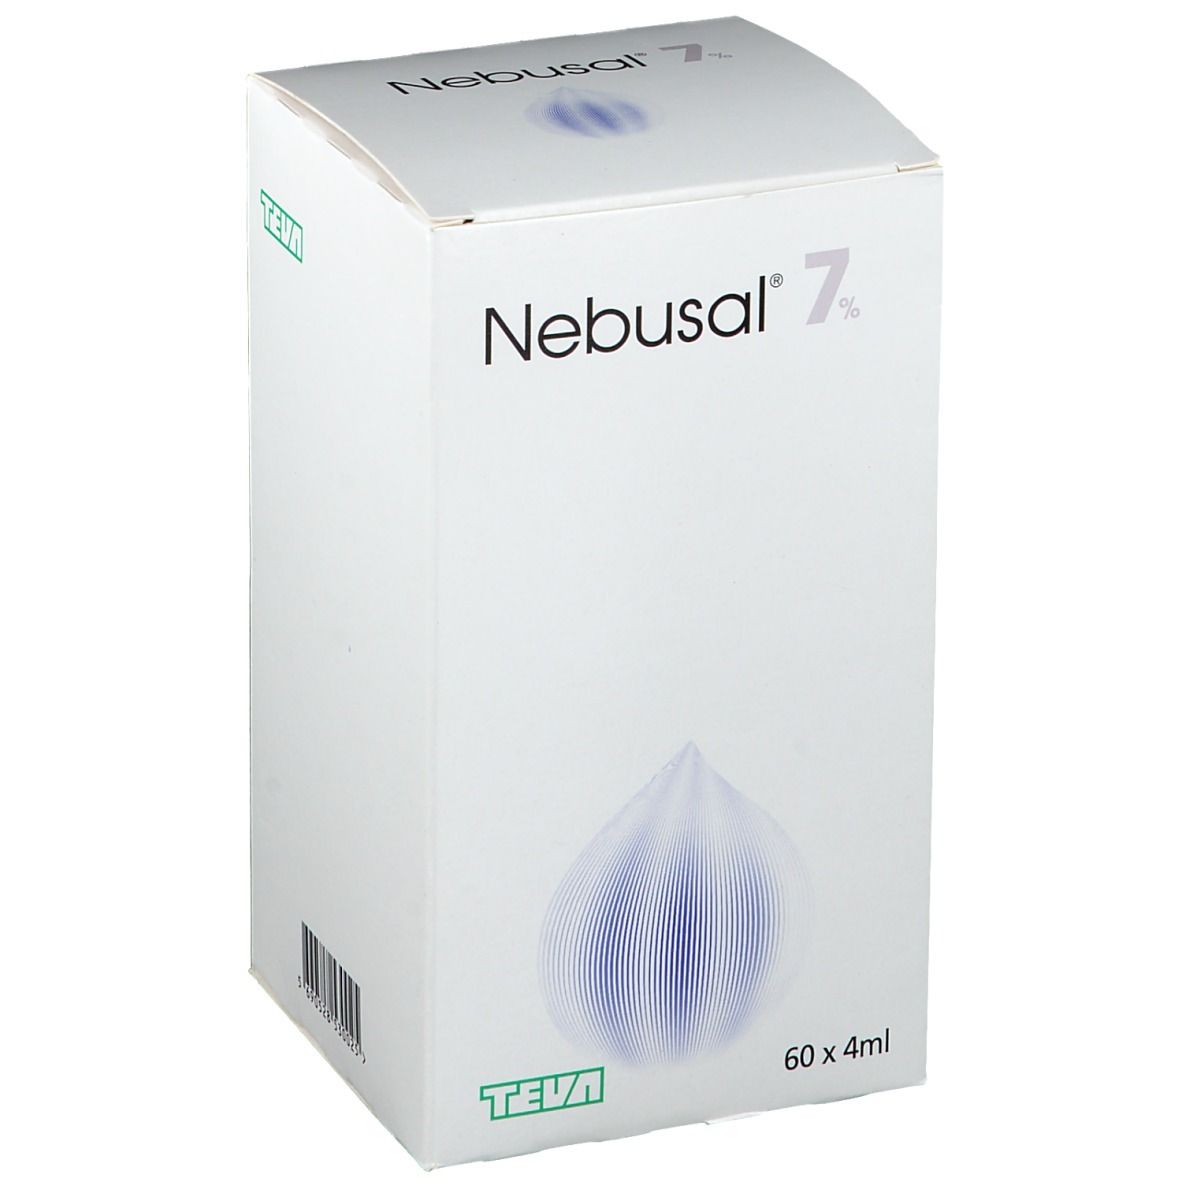 Image of NEBUSAL 7%